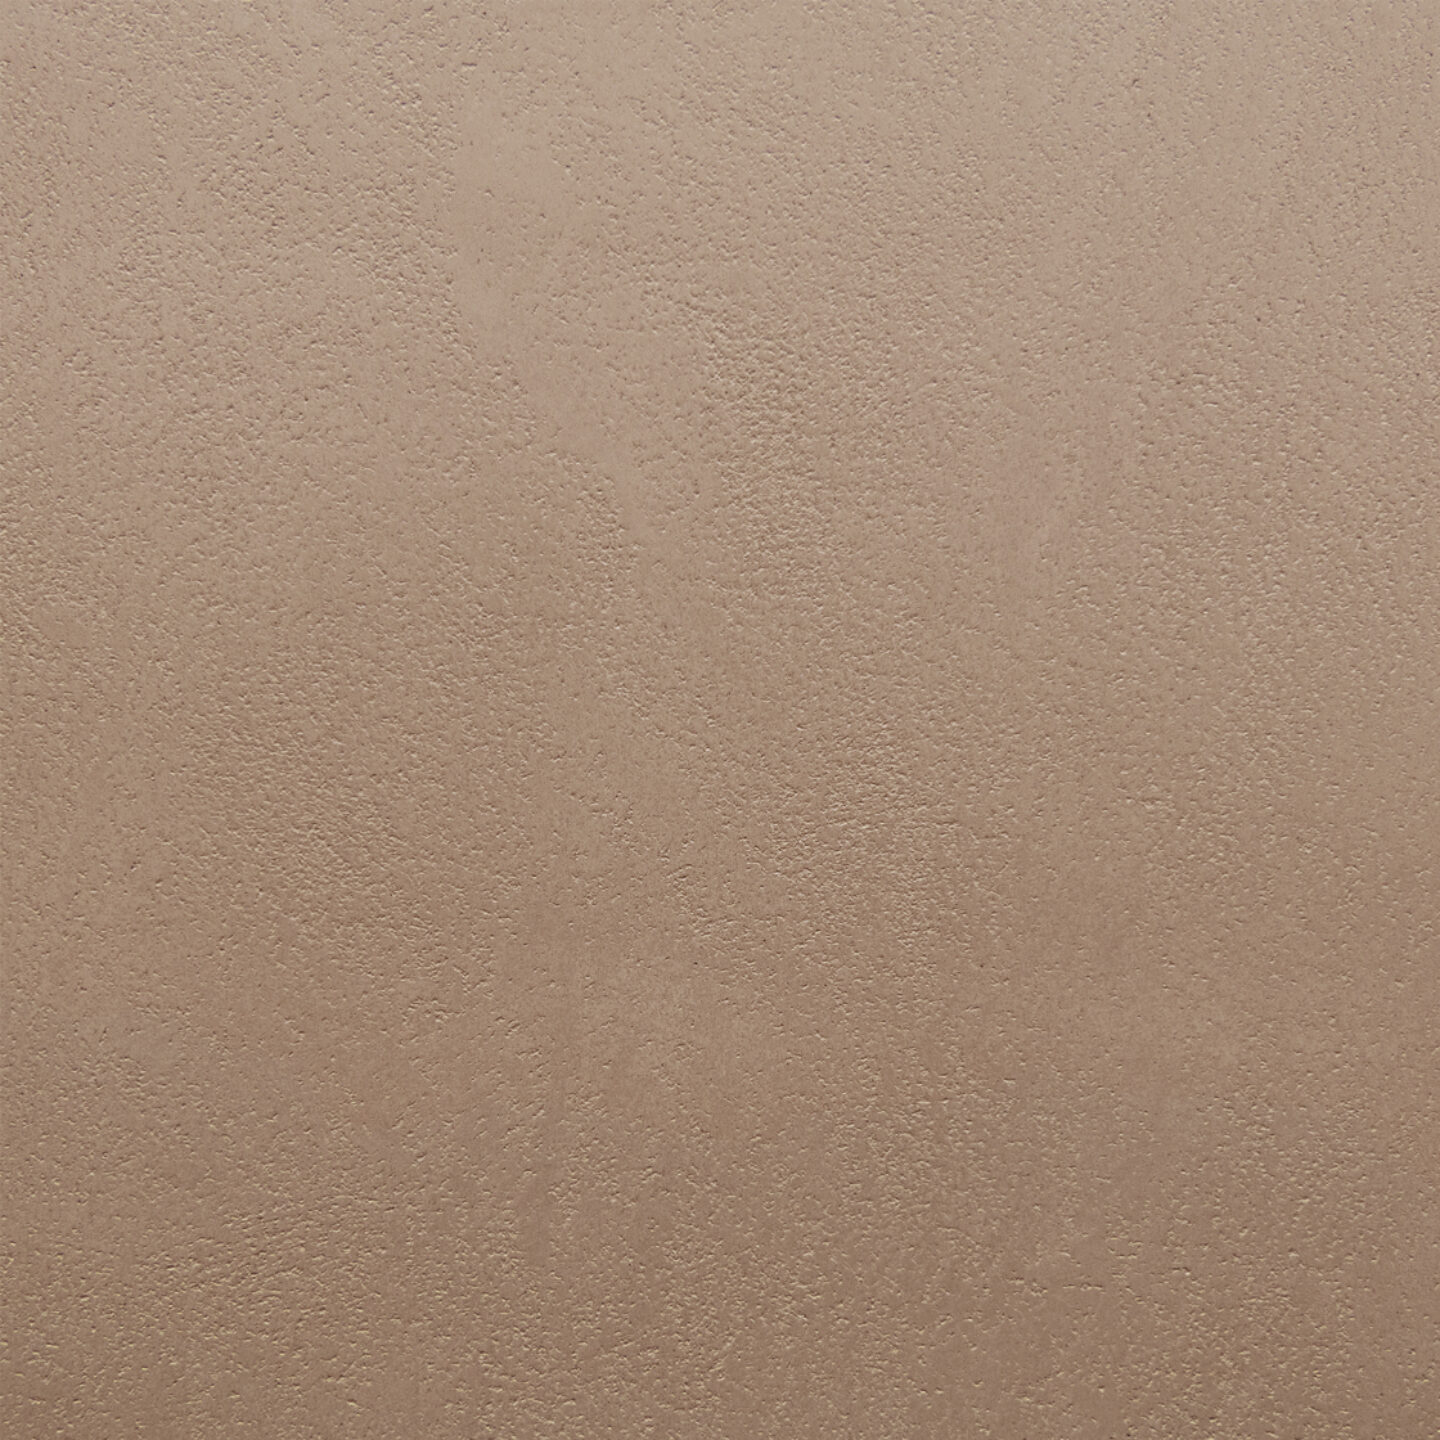 Close up of Armourcoat leatherstone exterior polished plaster finish - 59